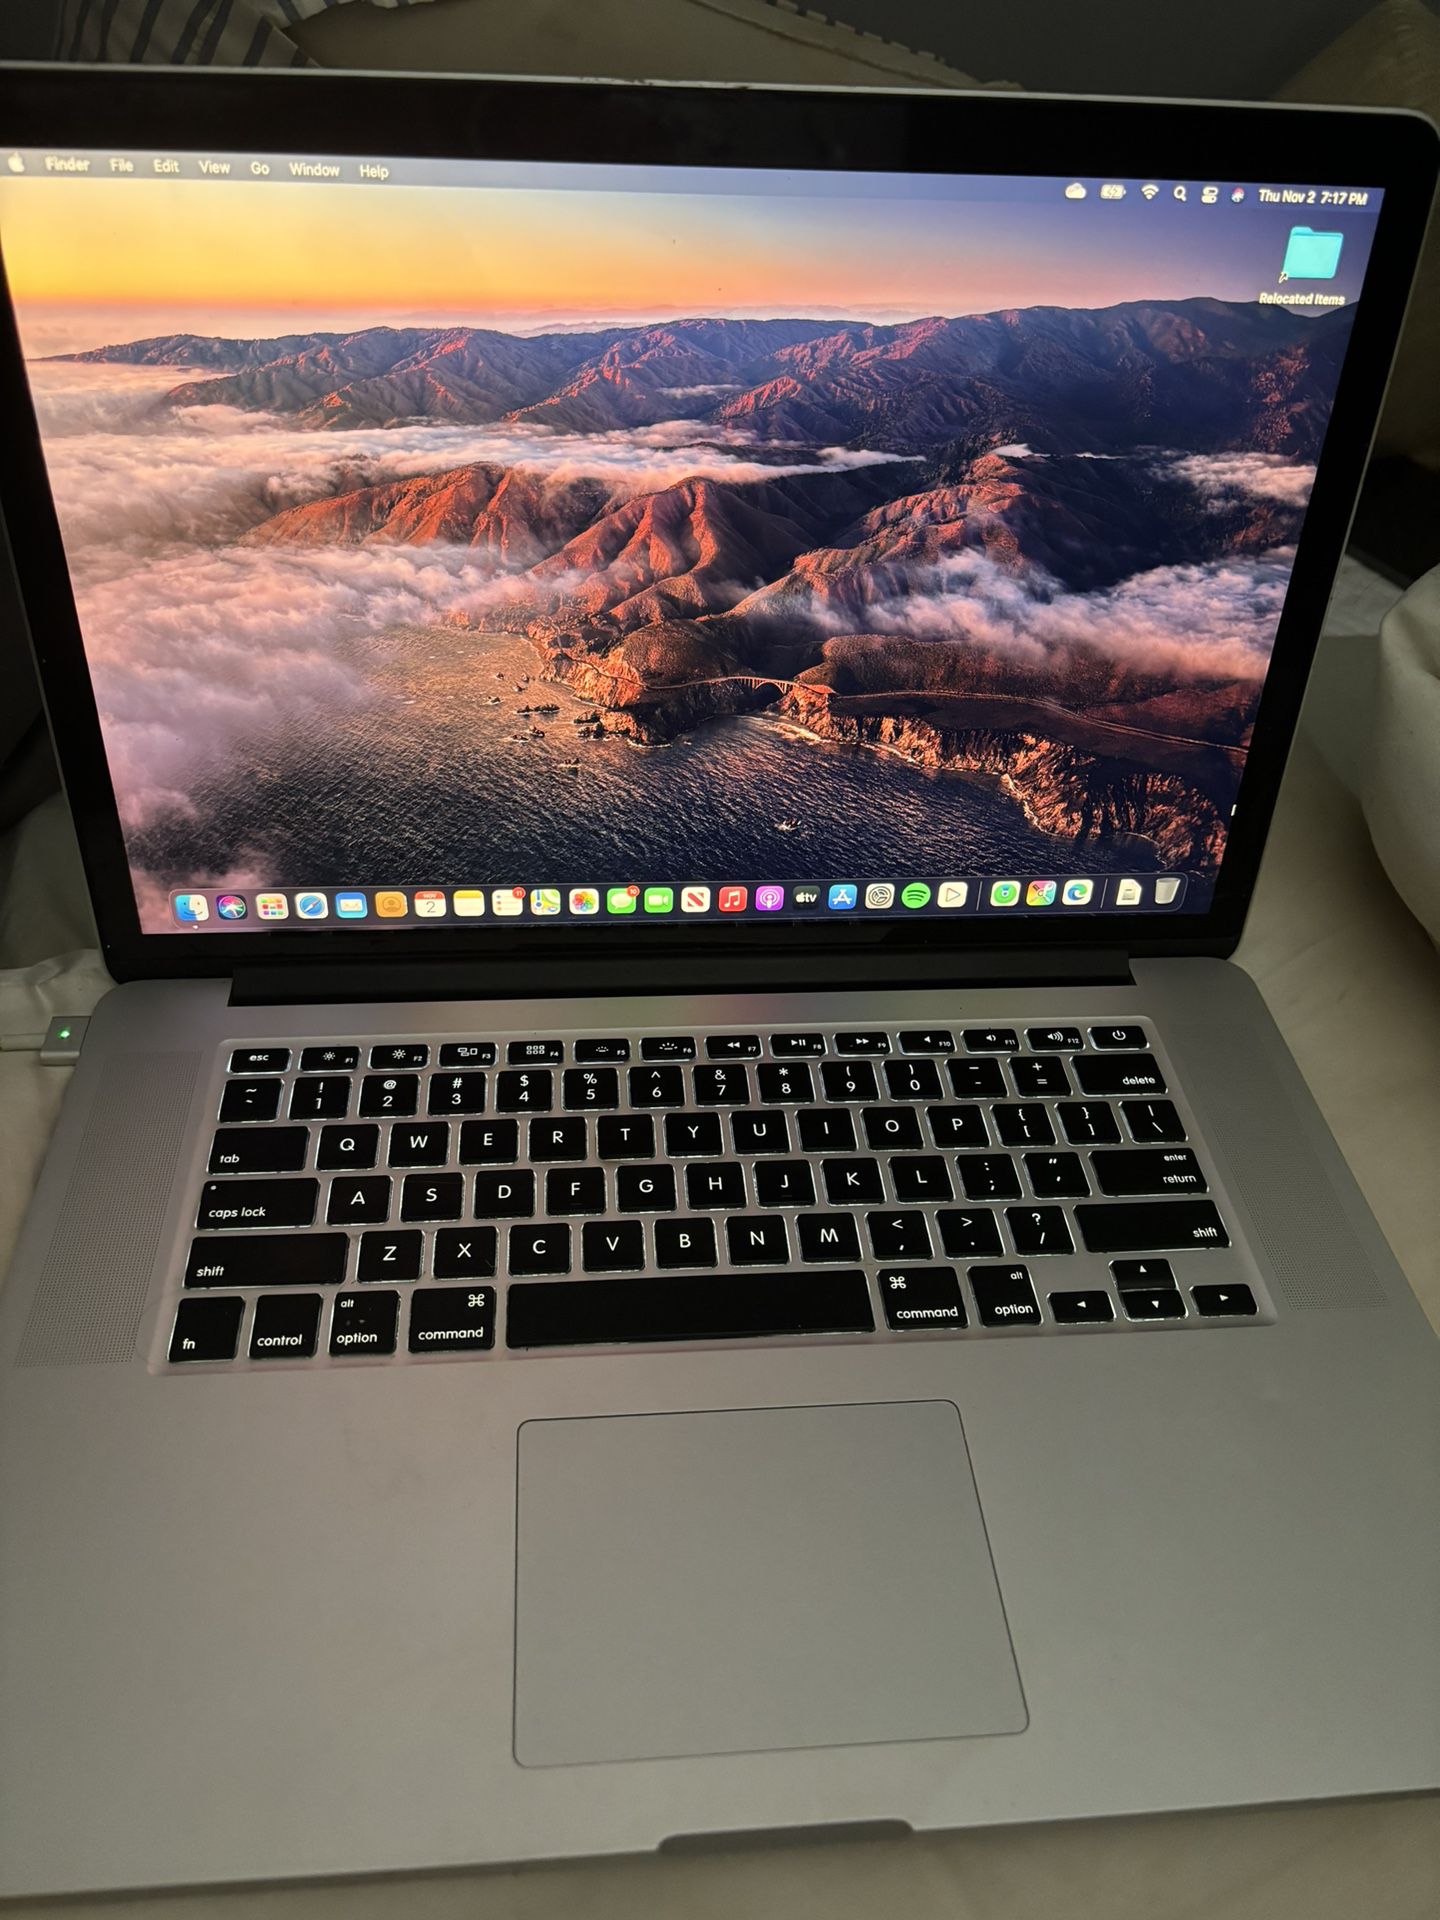 MacBook Pro 15” Intel I7 Late 2013